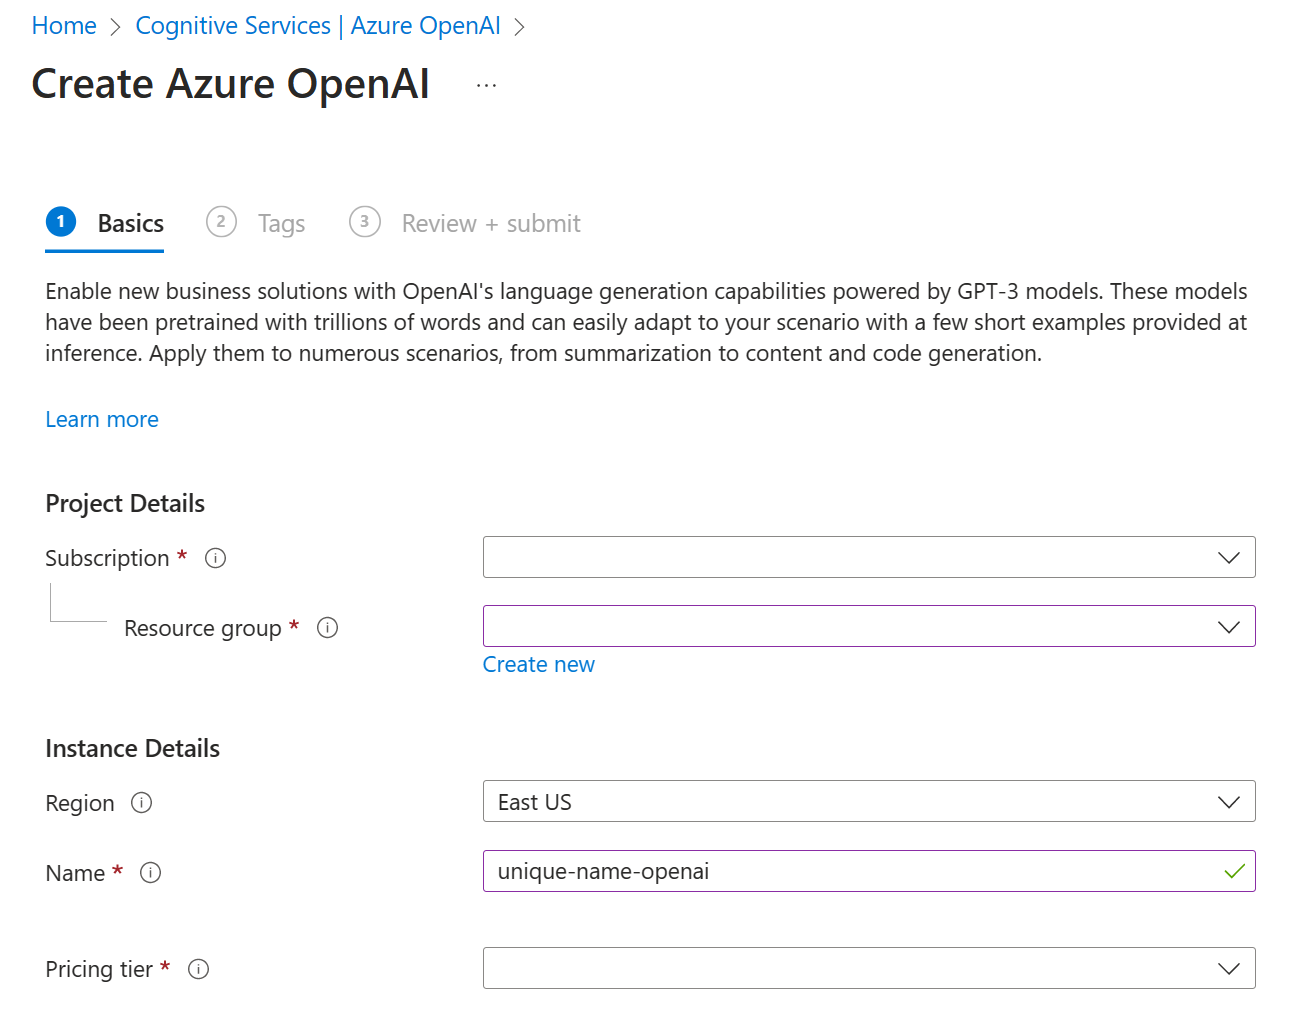 Screenshot of the Azure portal's page to create an Azure OpenAI Service resource.